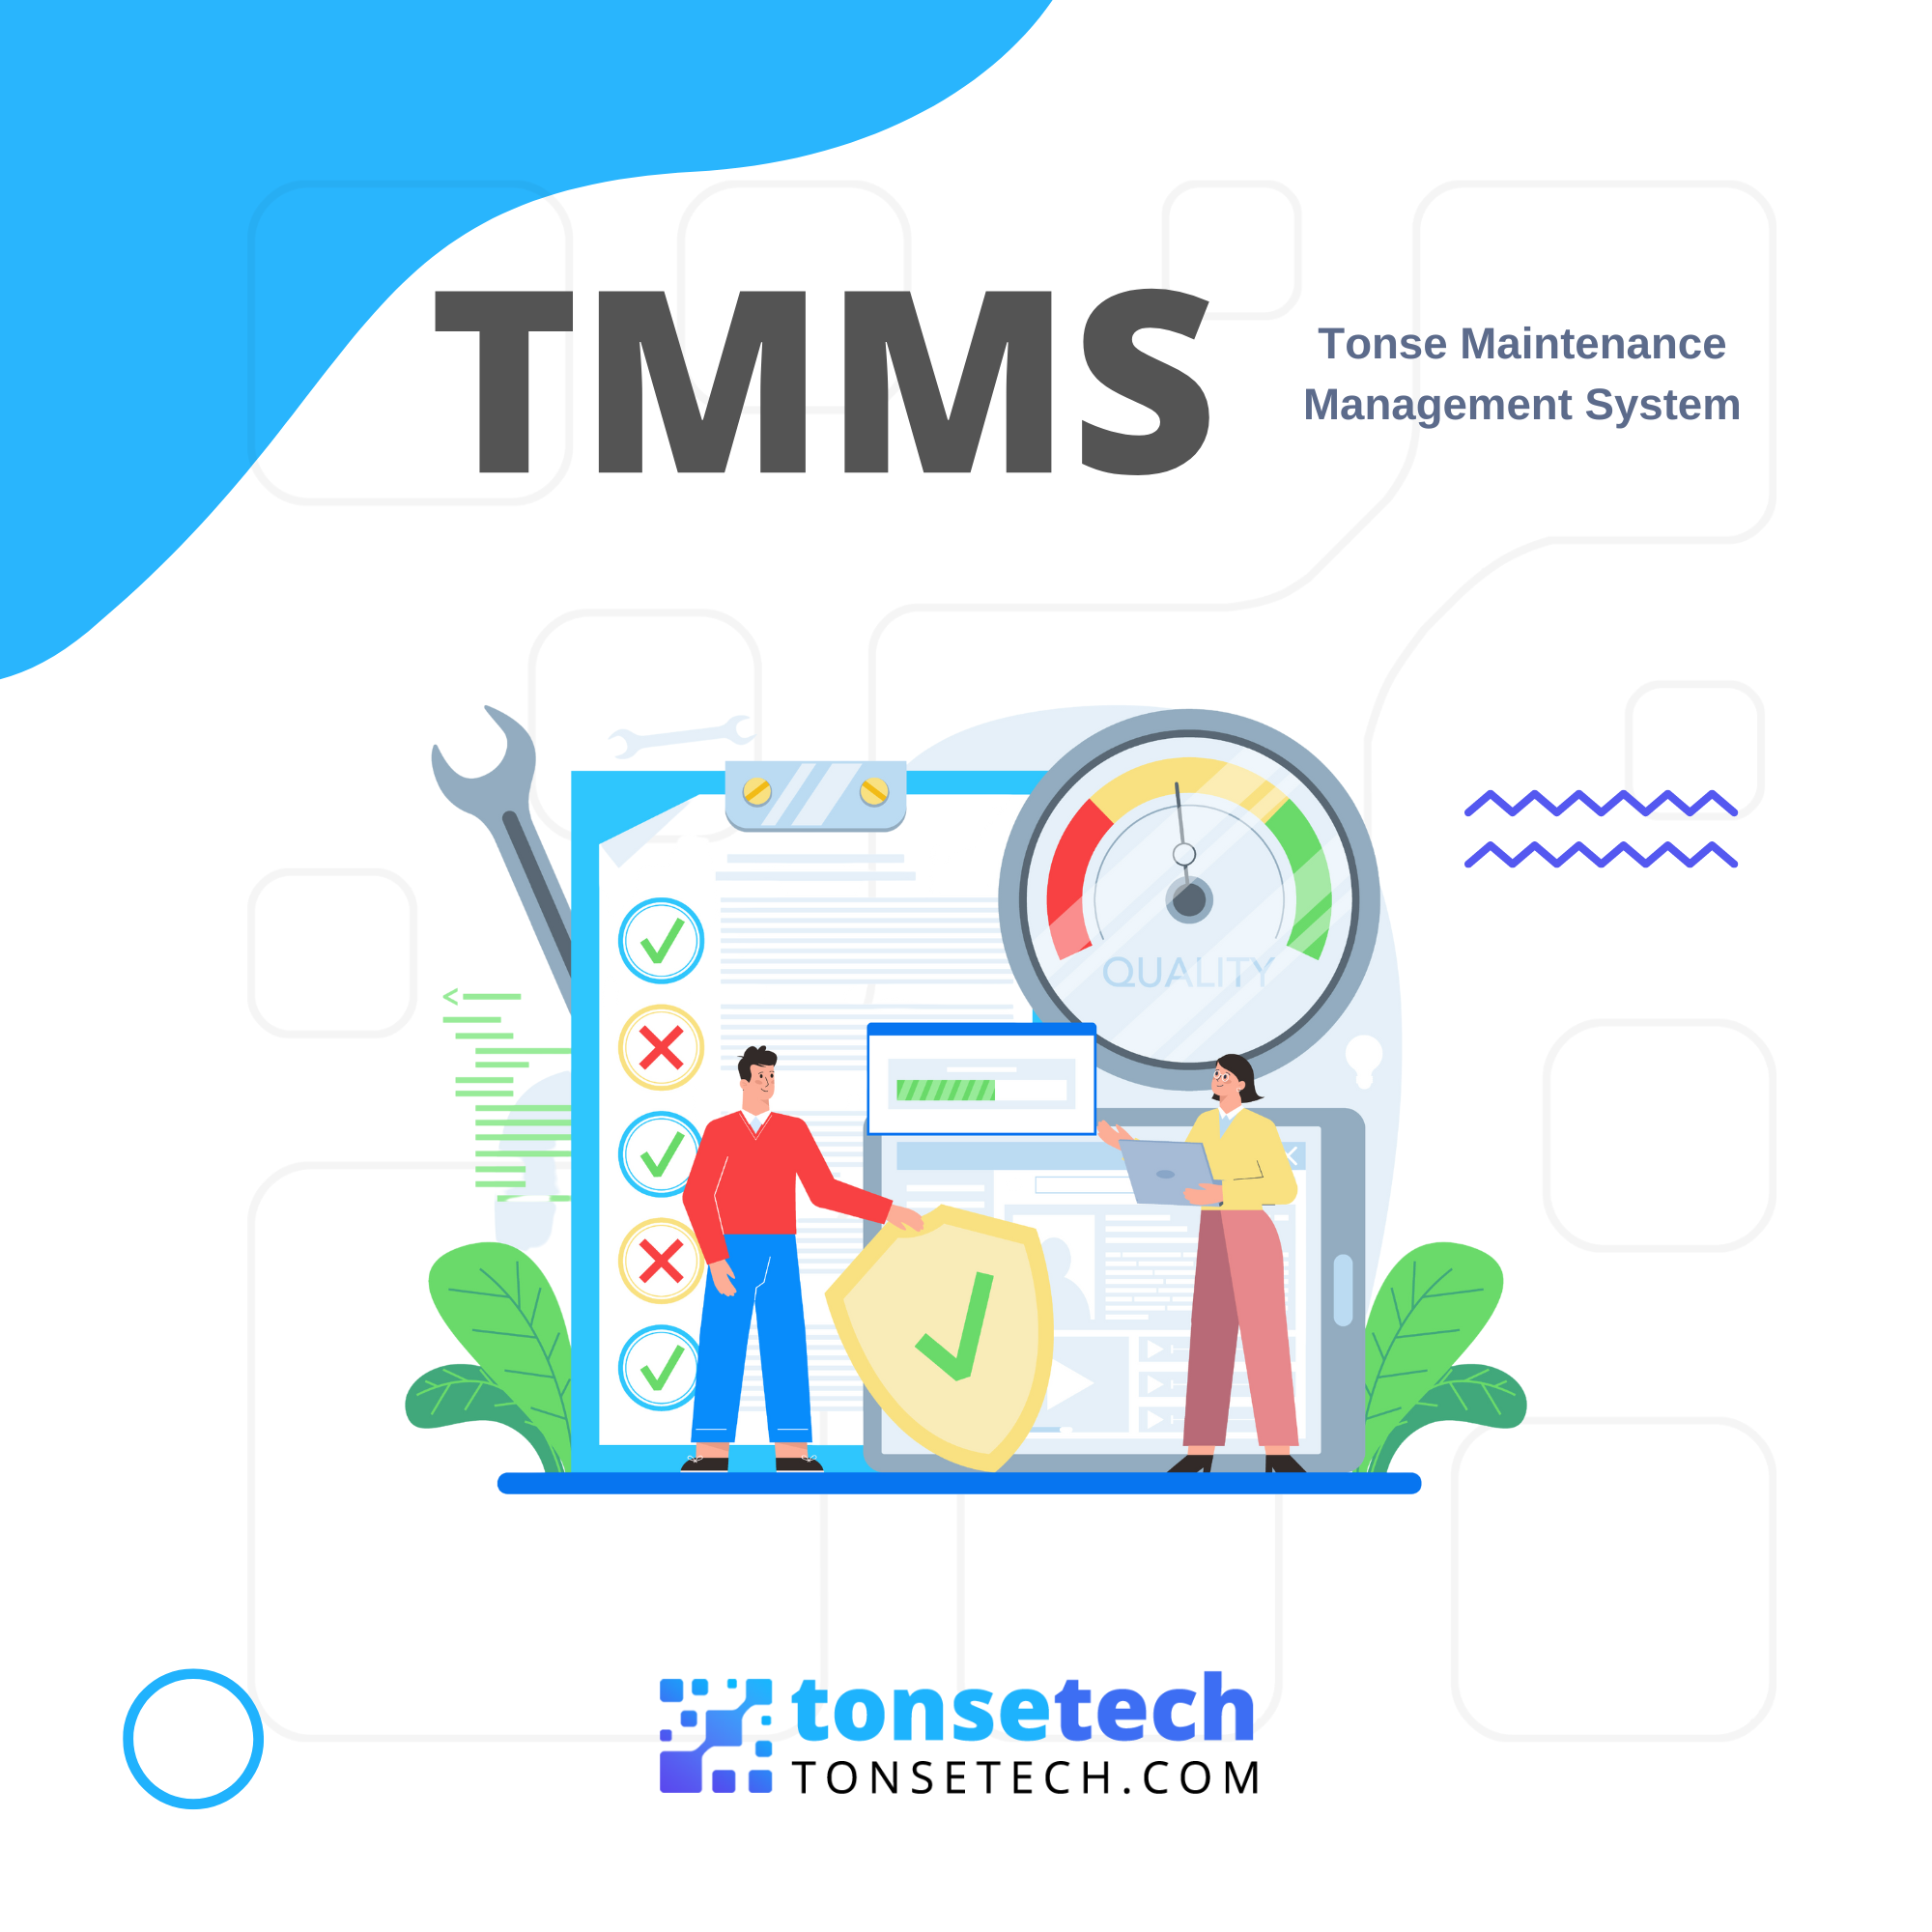 TMMS - Tonse Maintenance Management System